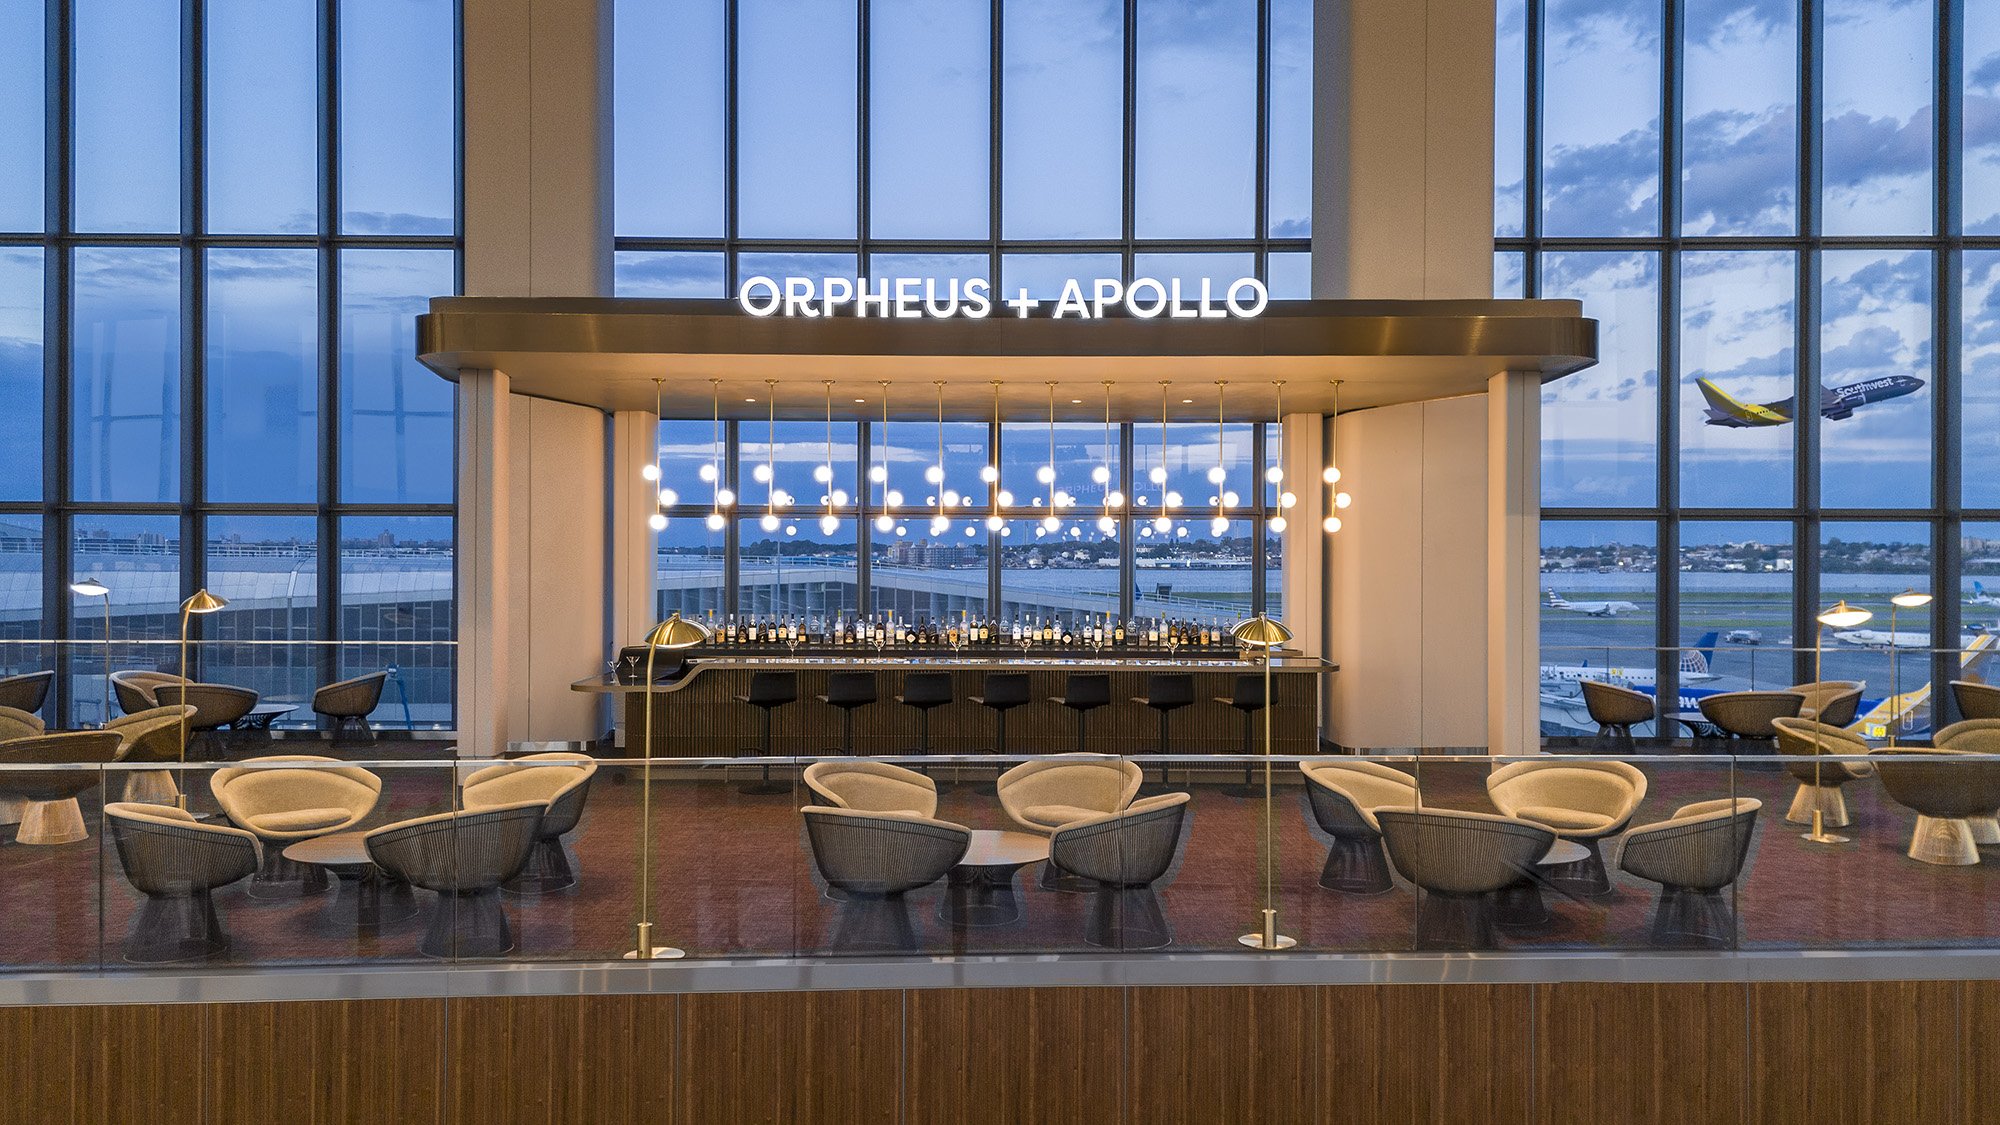 6 The Atrium Business & Conference Center at LaGuardia_Orpheus and Apollo2.jpg